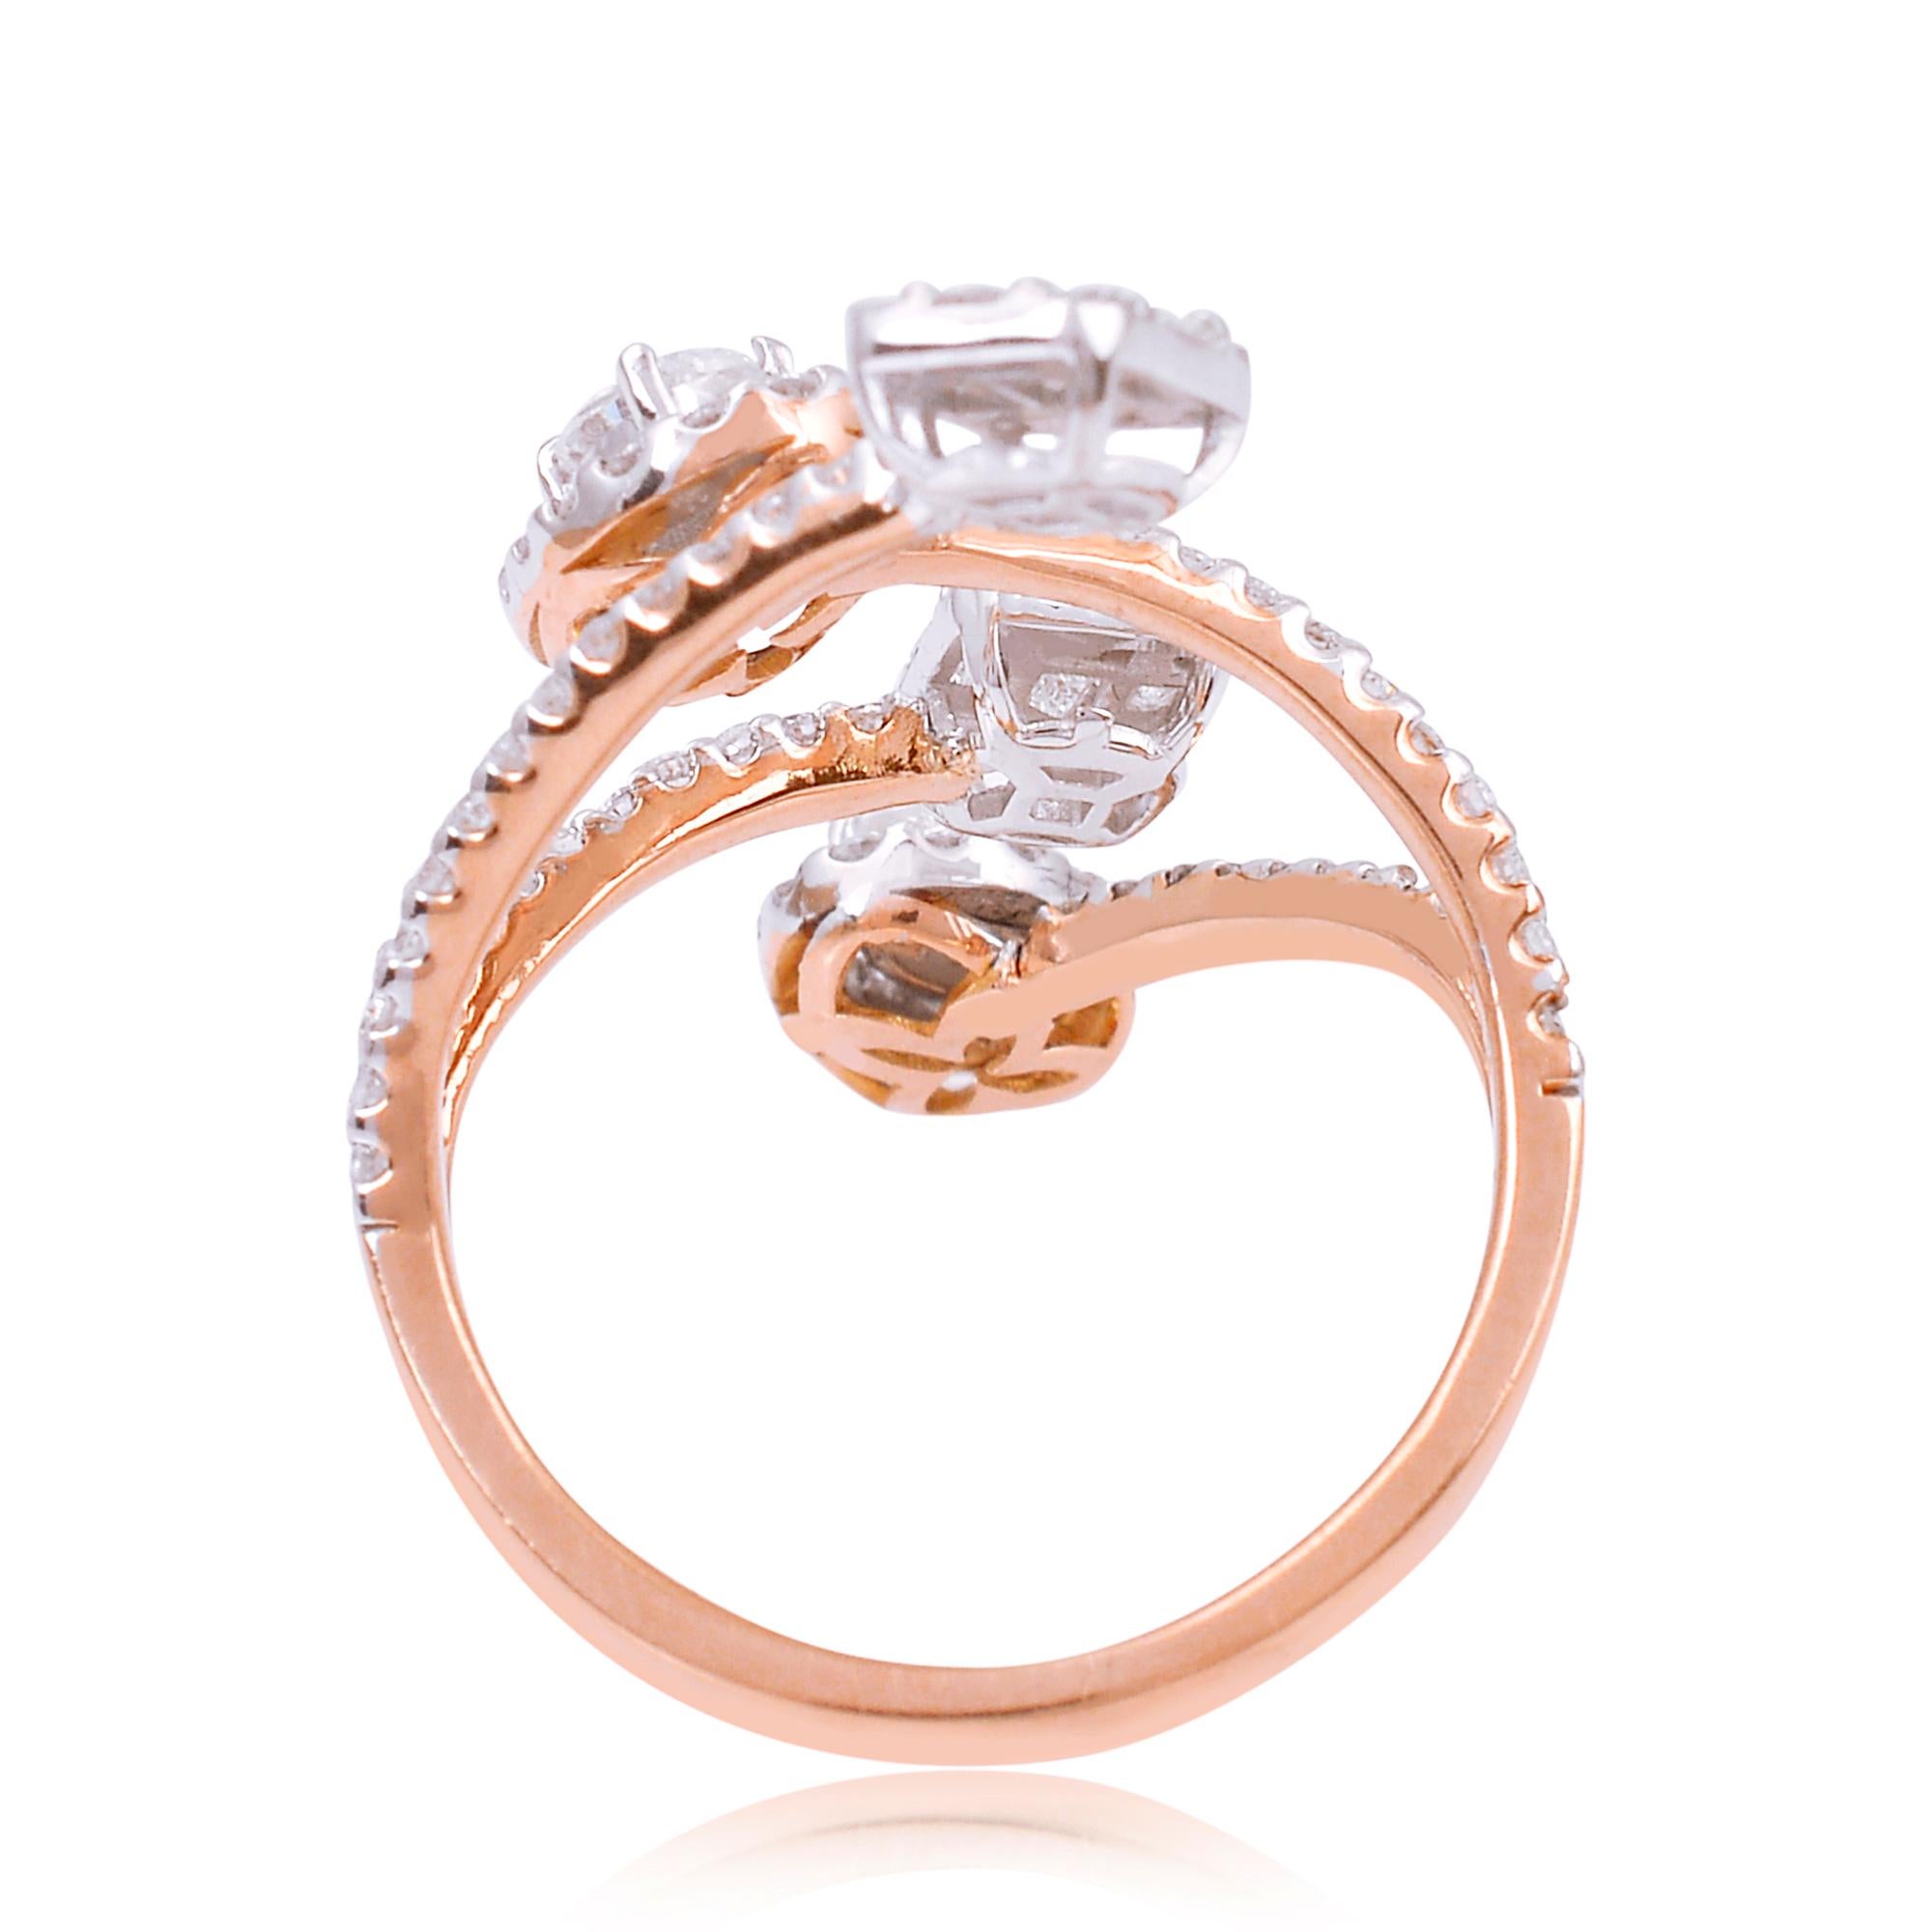 For Sale:  1.40 Carat SI Clarity HI Color Diamond Designer Ring 18 Karat Rose Gold Jewelry 2